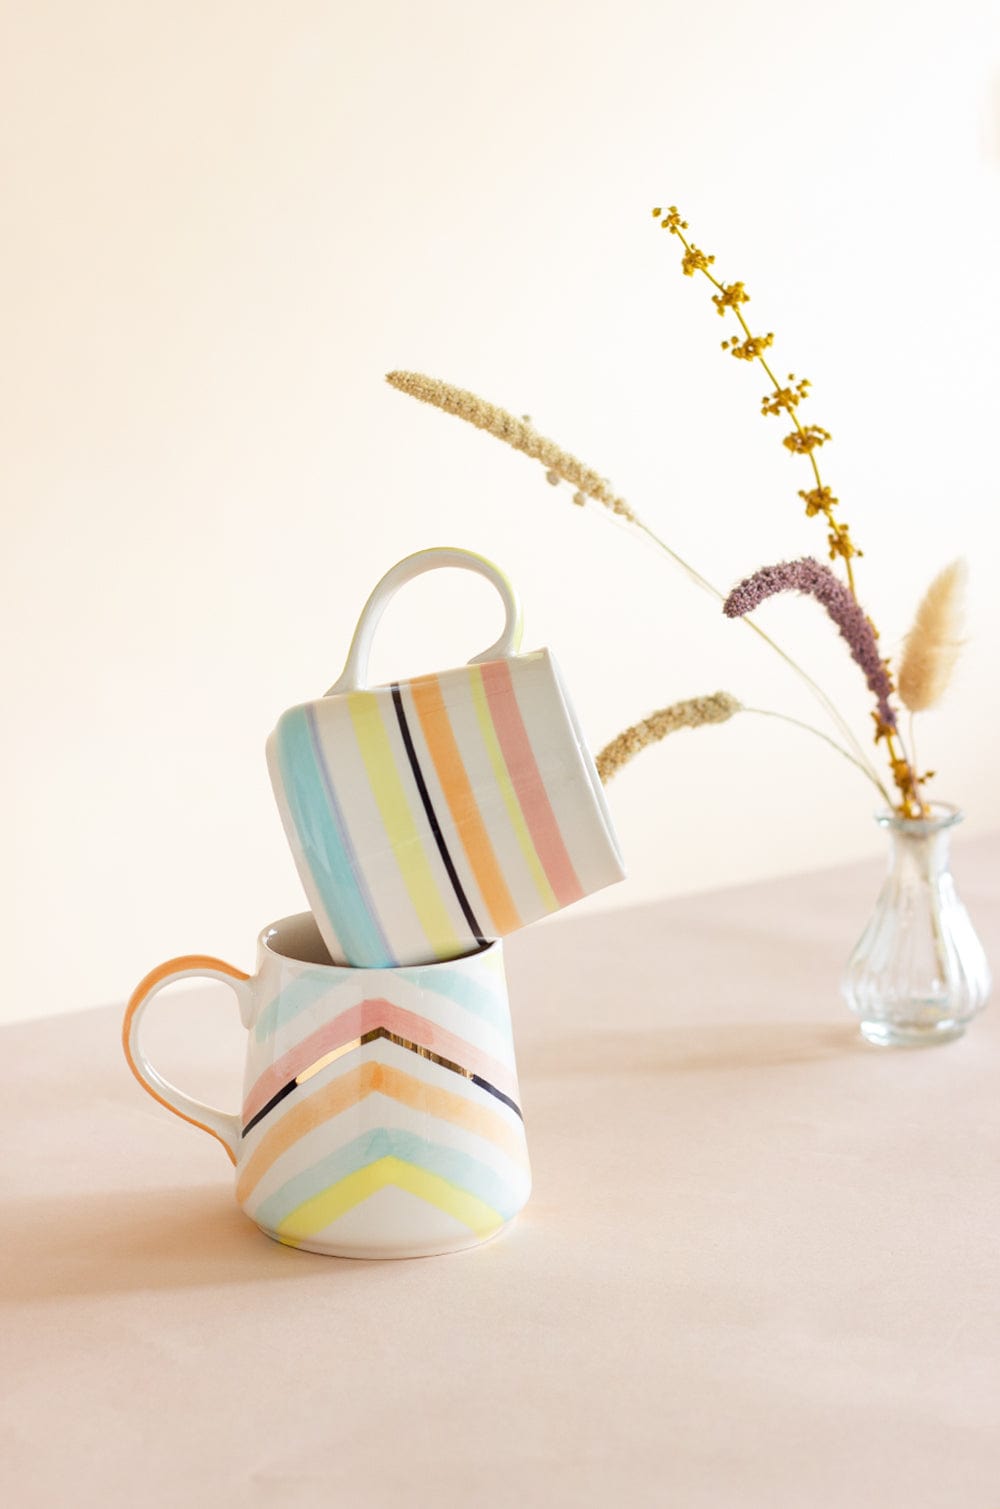 Twilight Handpainted Ceramic Mugs - Set of 2